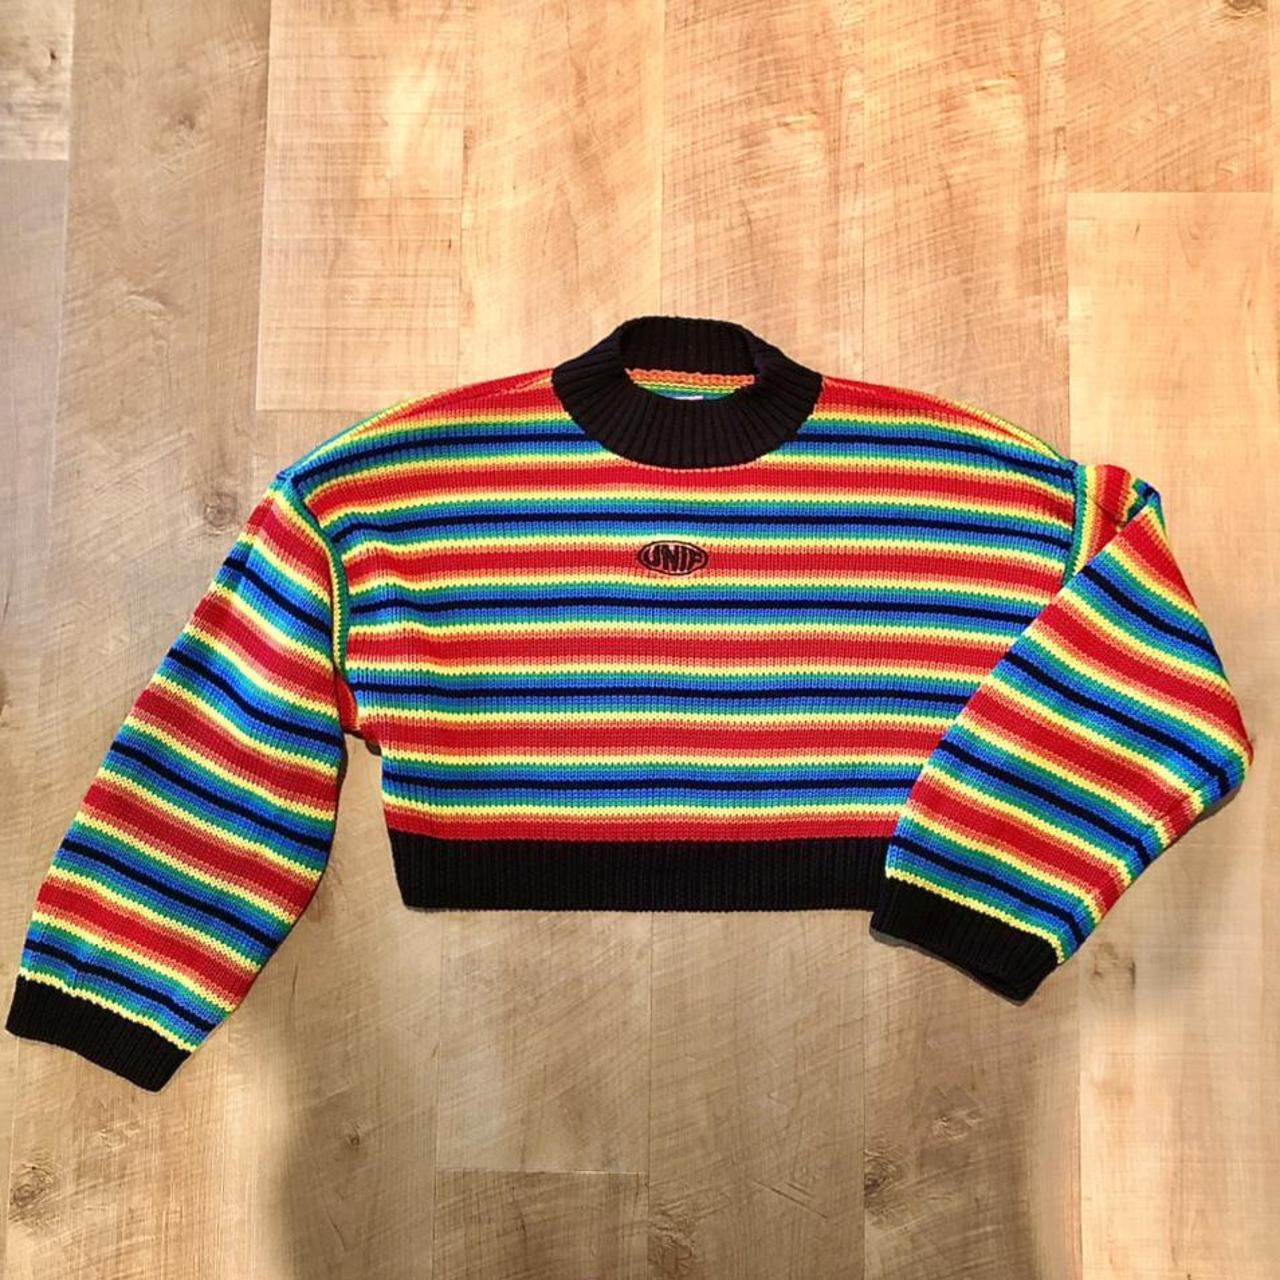 UNIF “Clarissa Sweater” in Rainbow!! 🌈 Size Women’s... - Depop